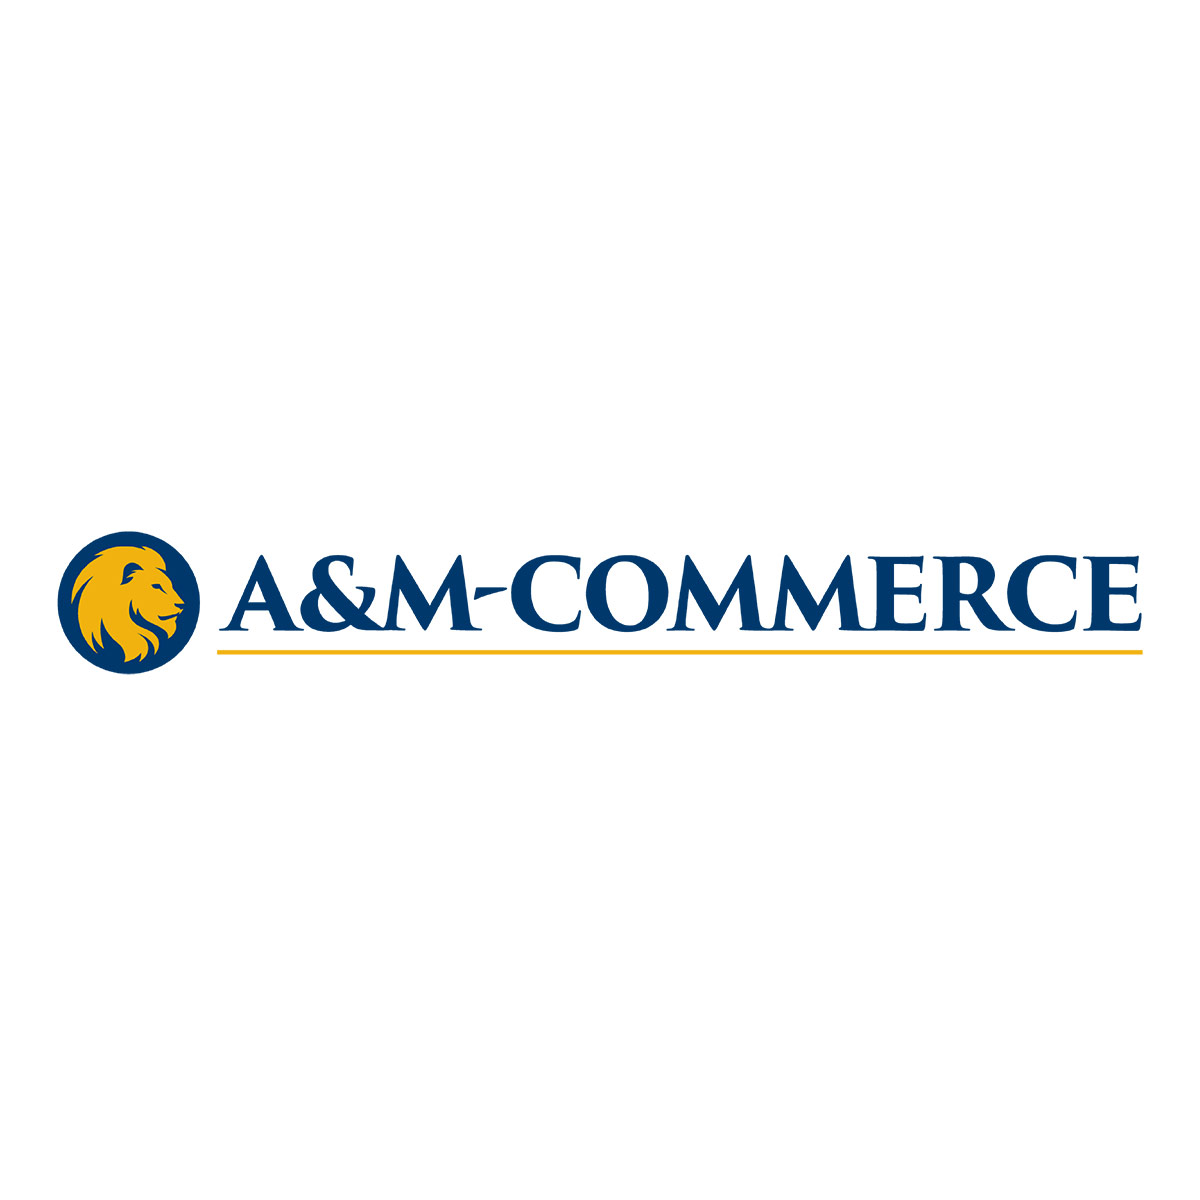 Texas A&M University - Commerce - square logo